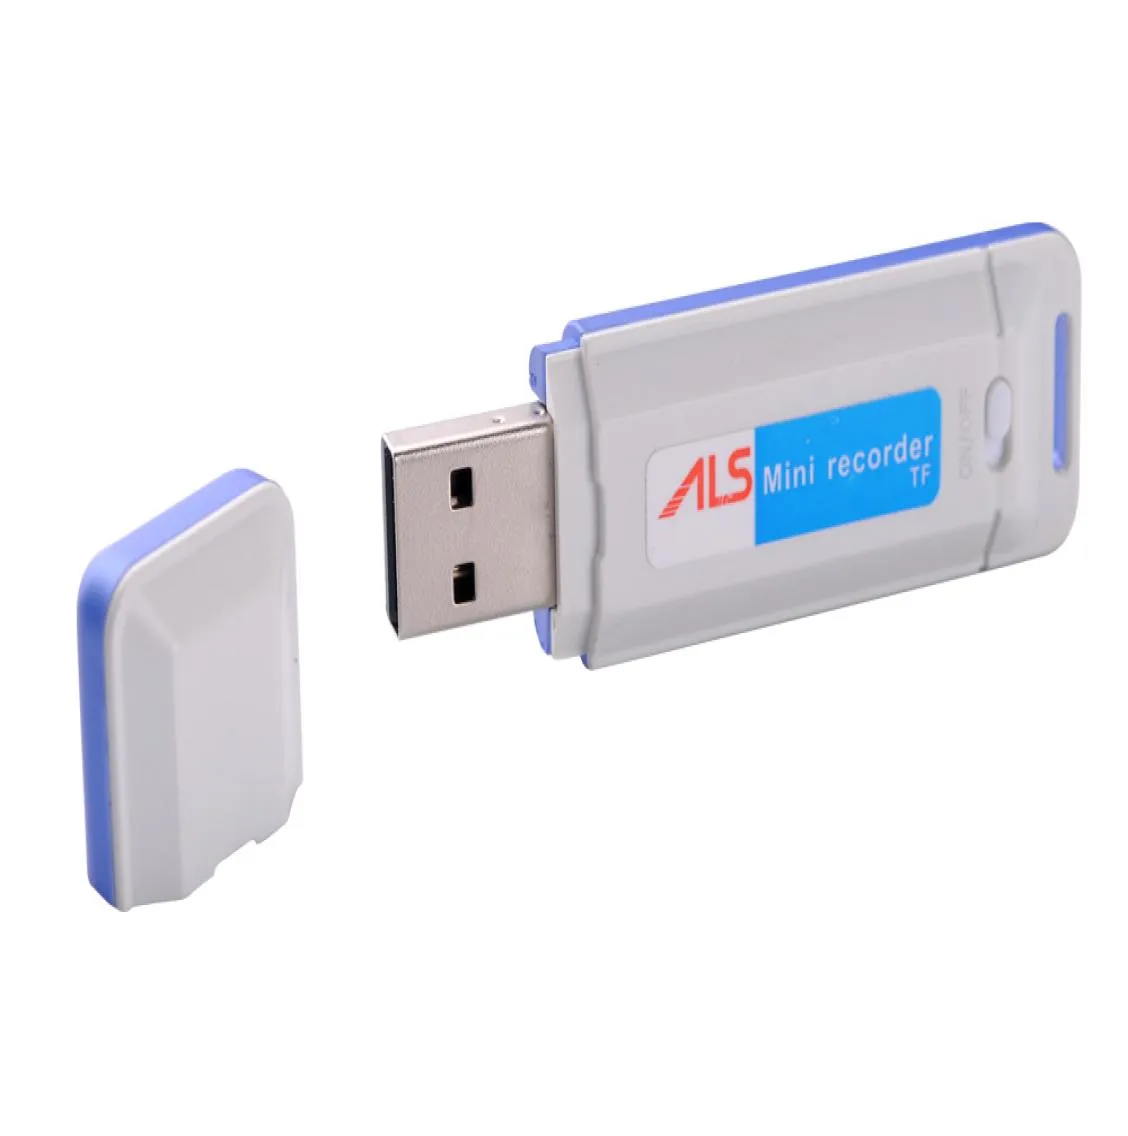 USB Disk mini Audio Voice Recorder K1 USB Flash Drive Dictafoon Pen ondersteuning tot 32 GB zwart wit in retailverpakking dropshippi3404045